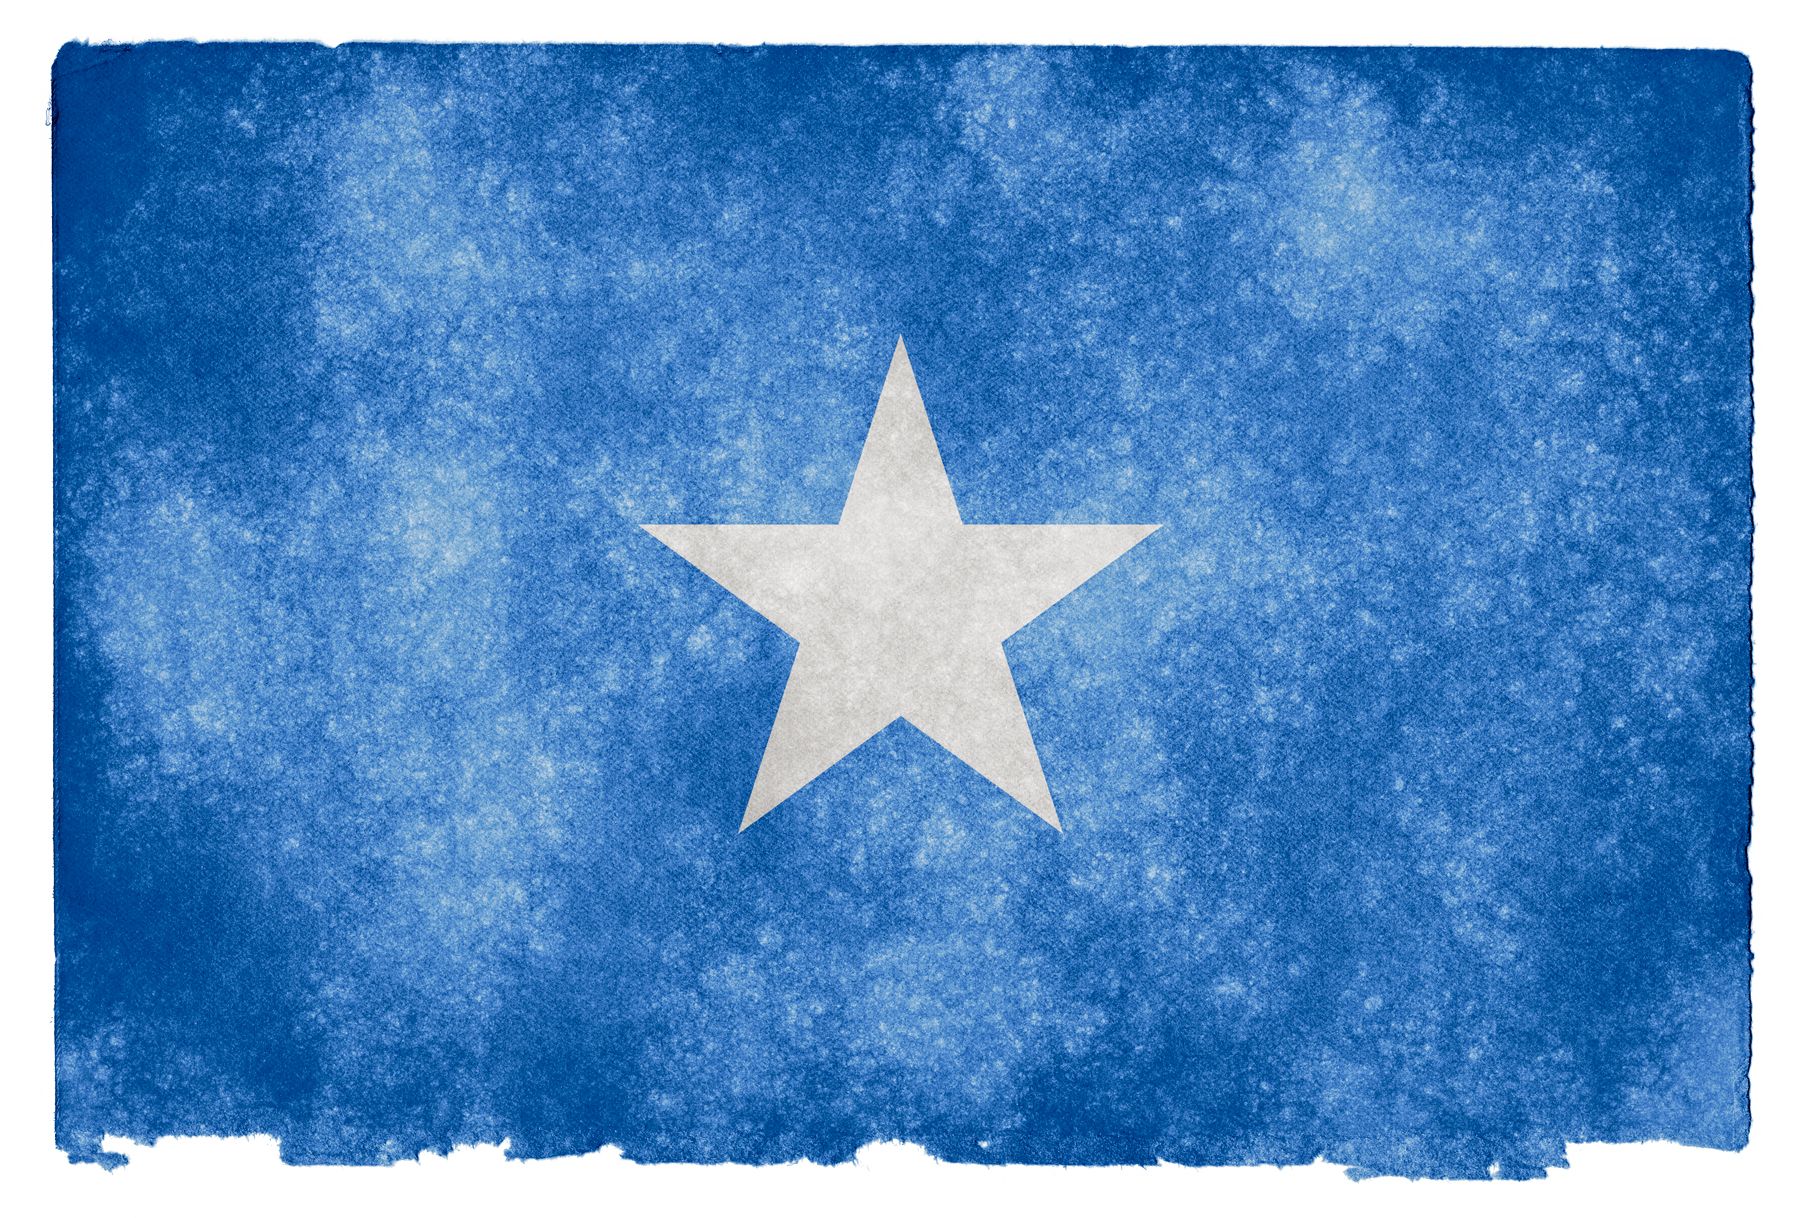 Somalia Grunge Flag by somadjinn.deviantart.com on @deviantART ...